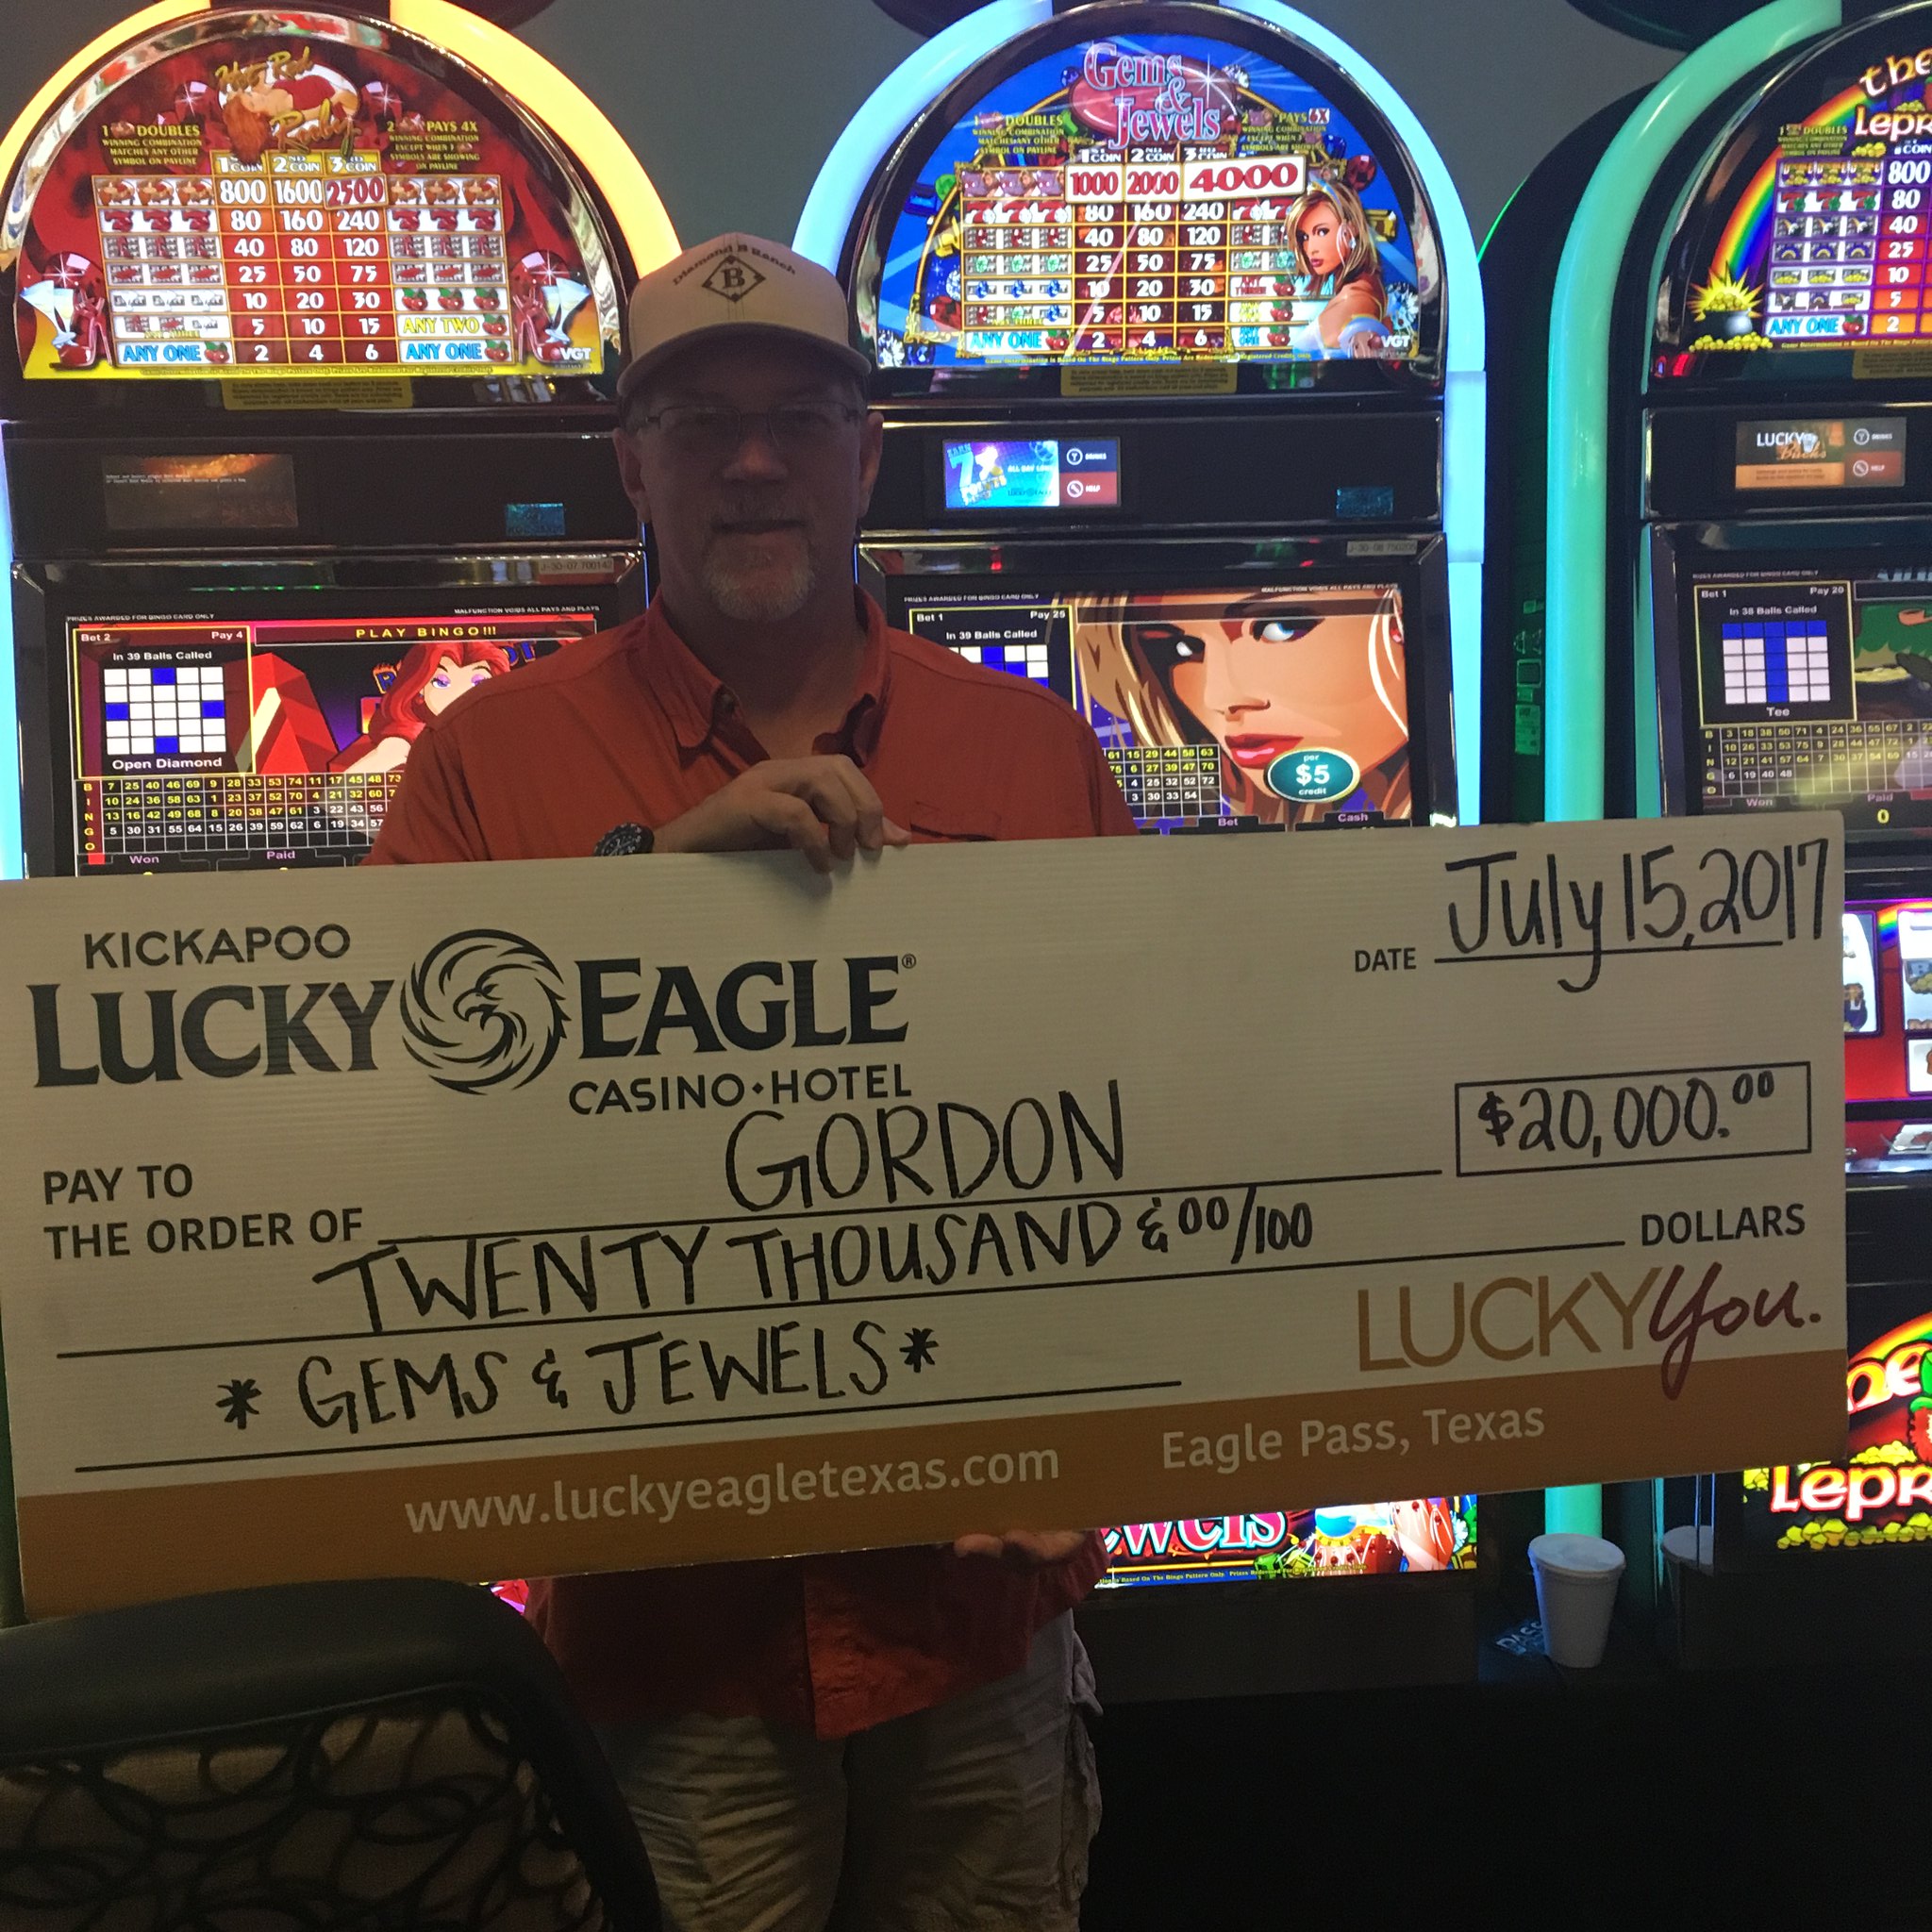 Kickapoo lucky eagle casino reviews